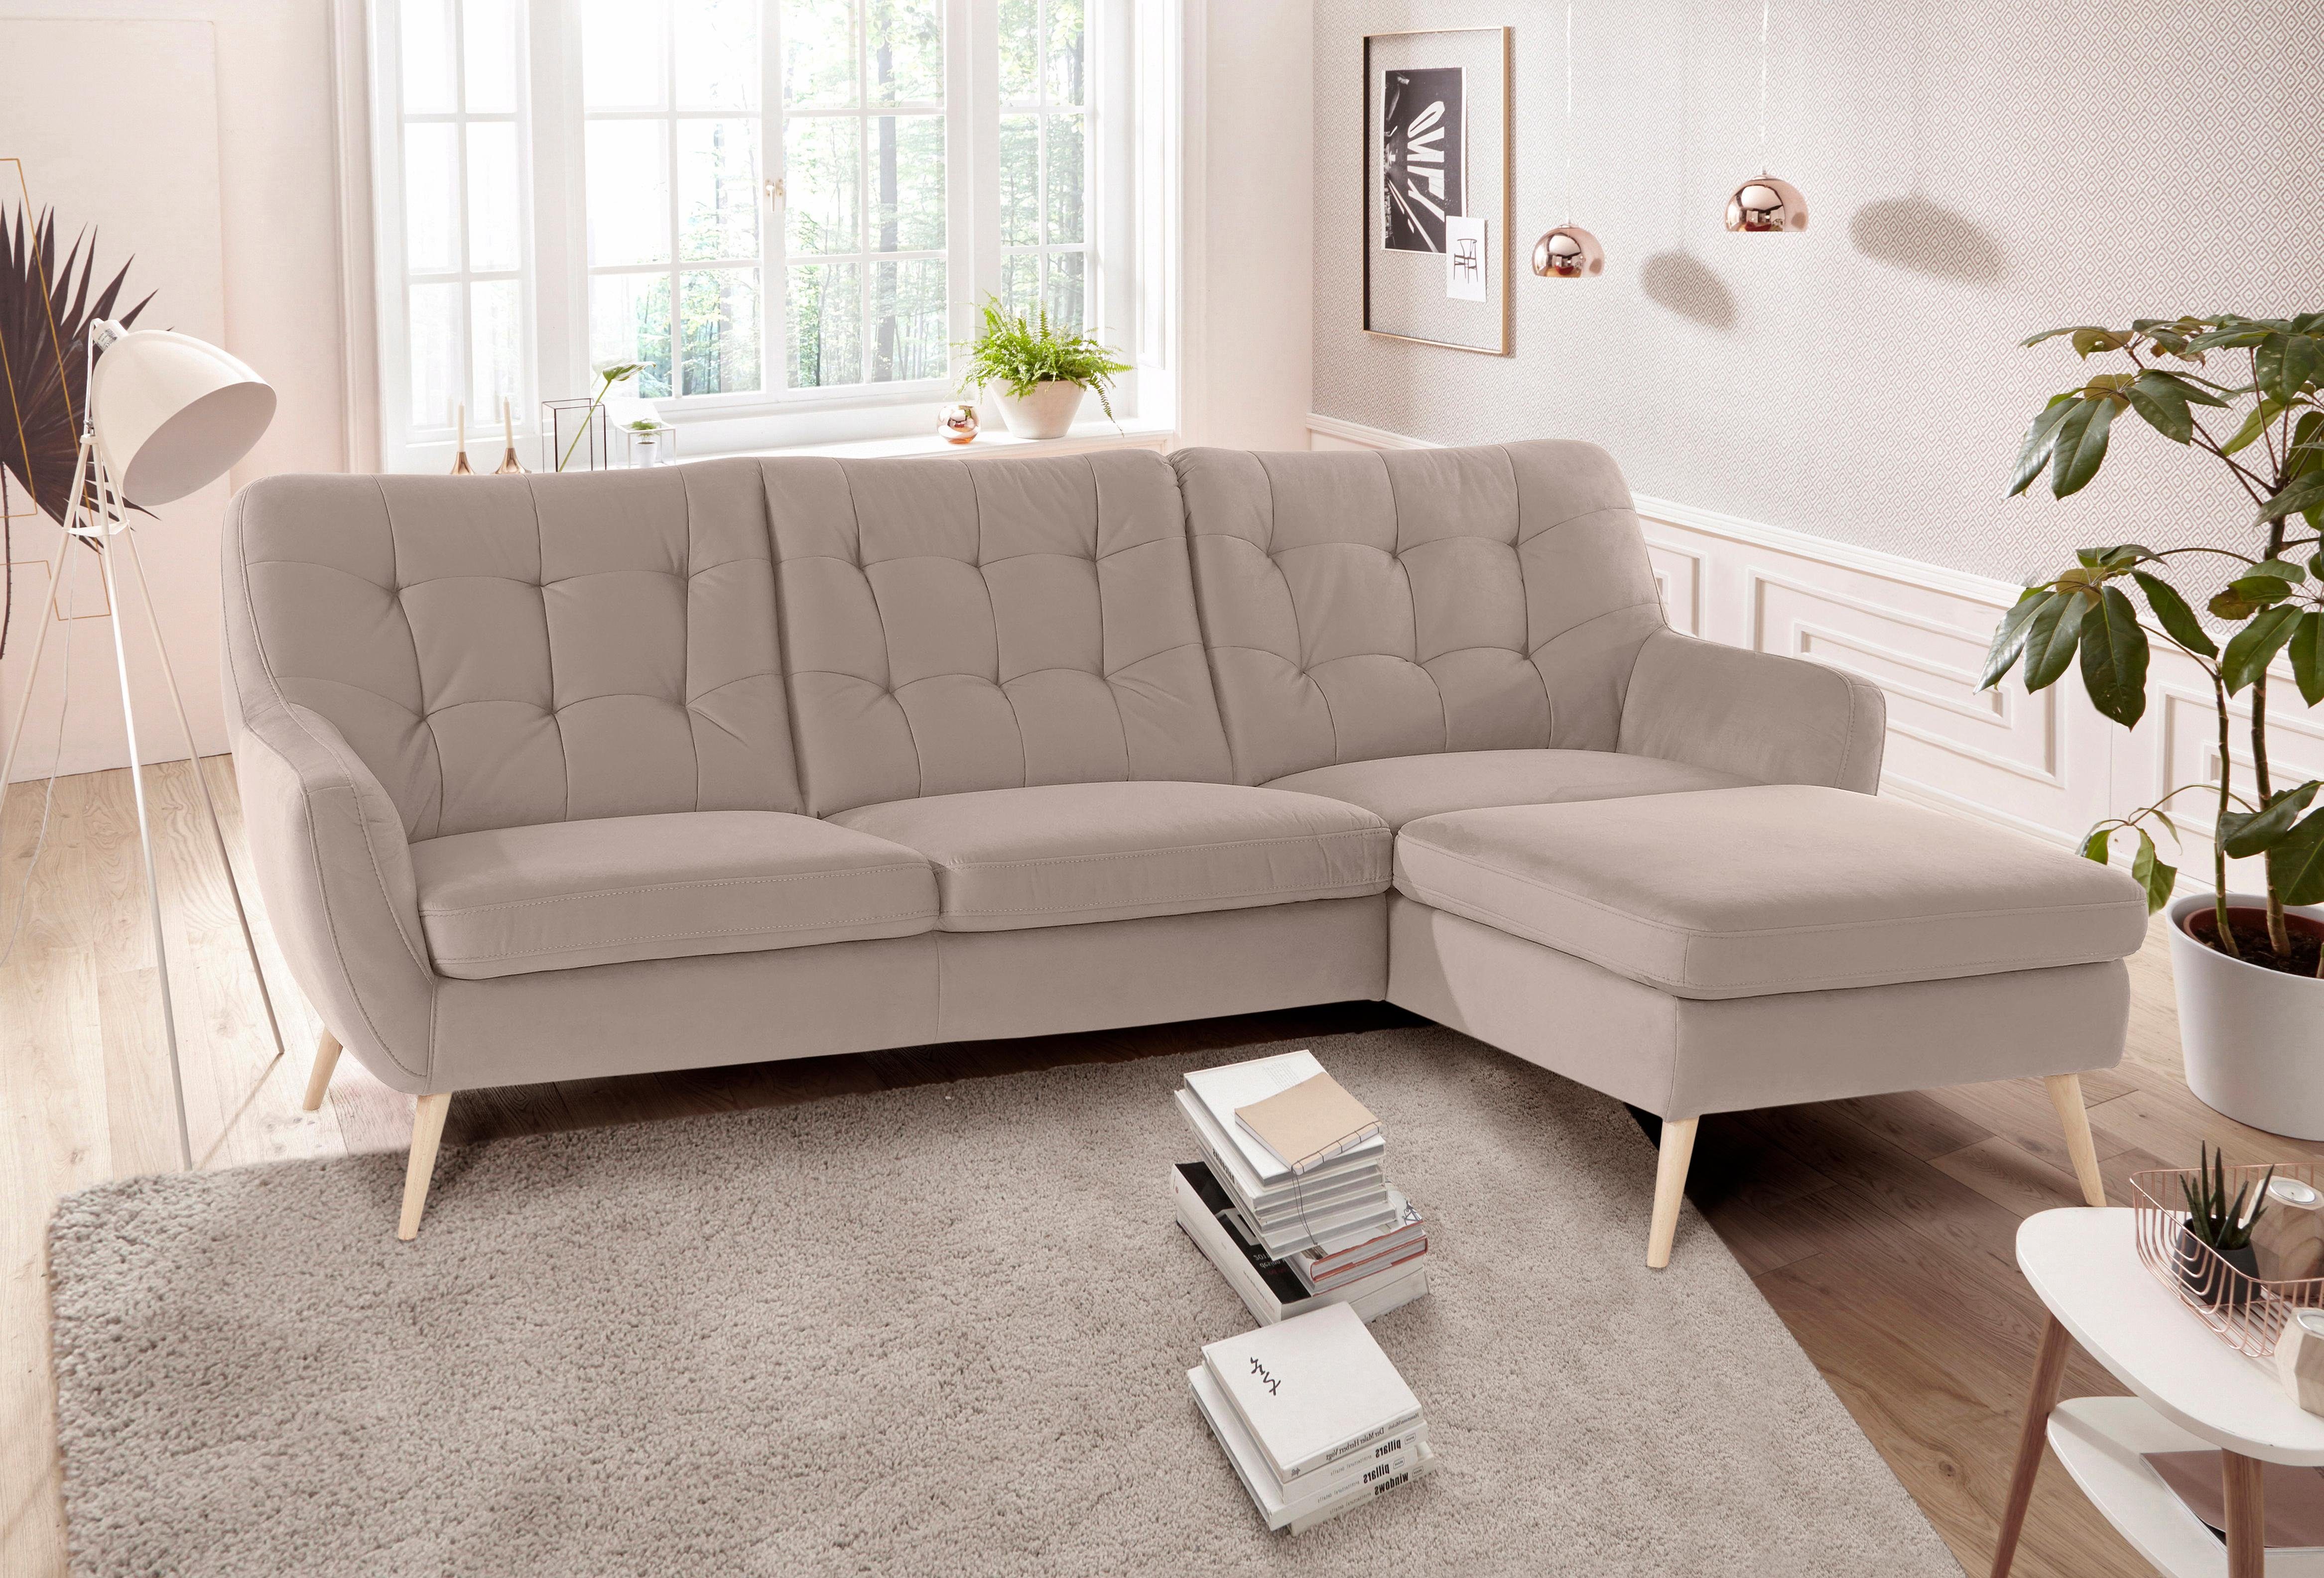 rechts - links sofa Recamiere Scandi, fashion exxpo oder Ecksofa bestellbar